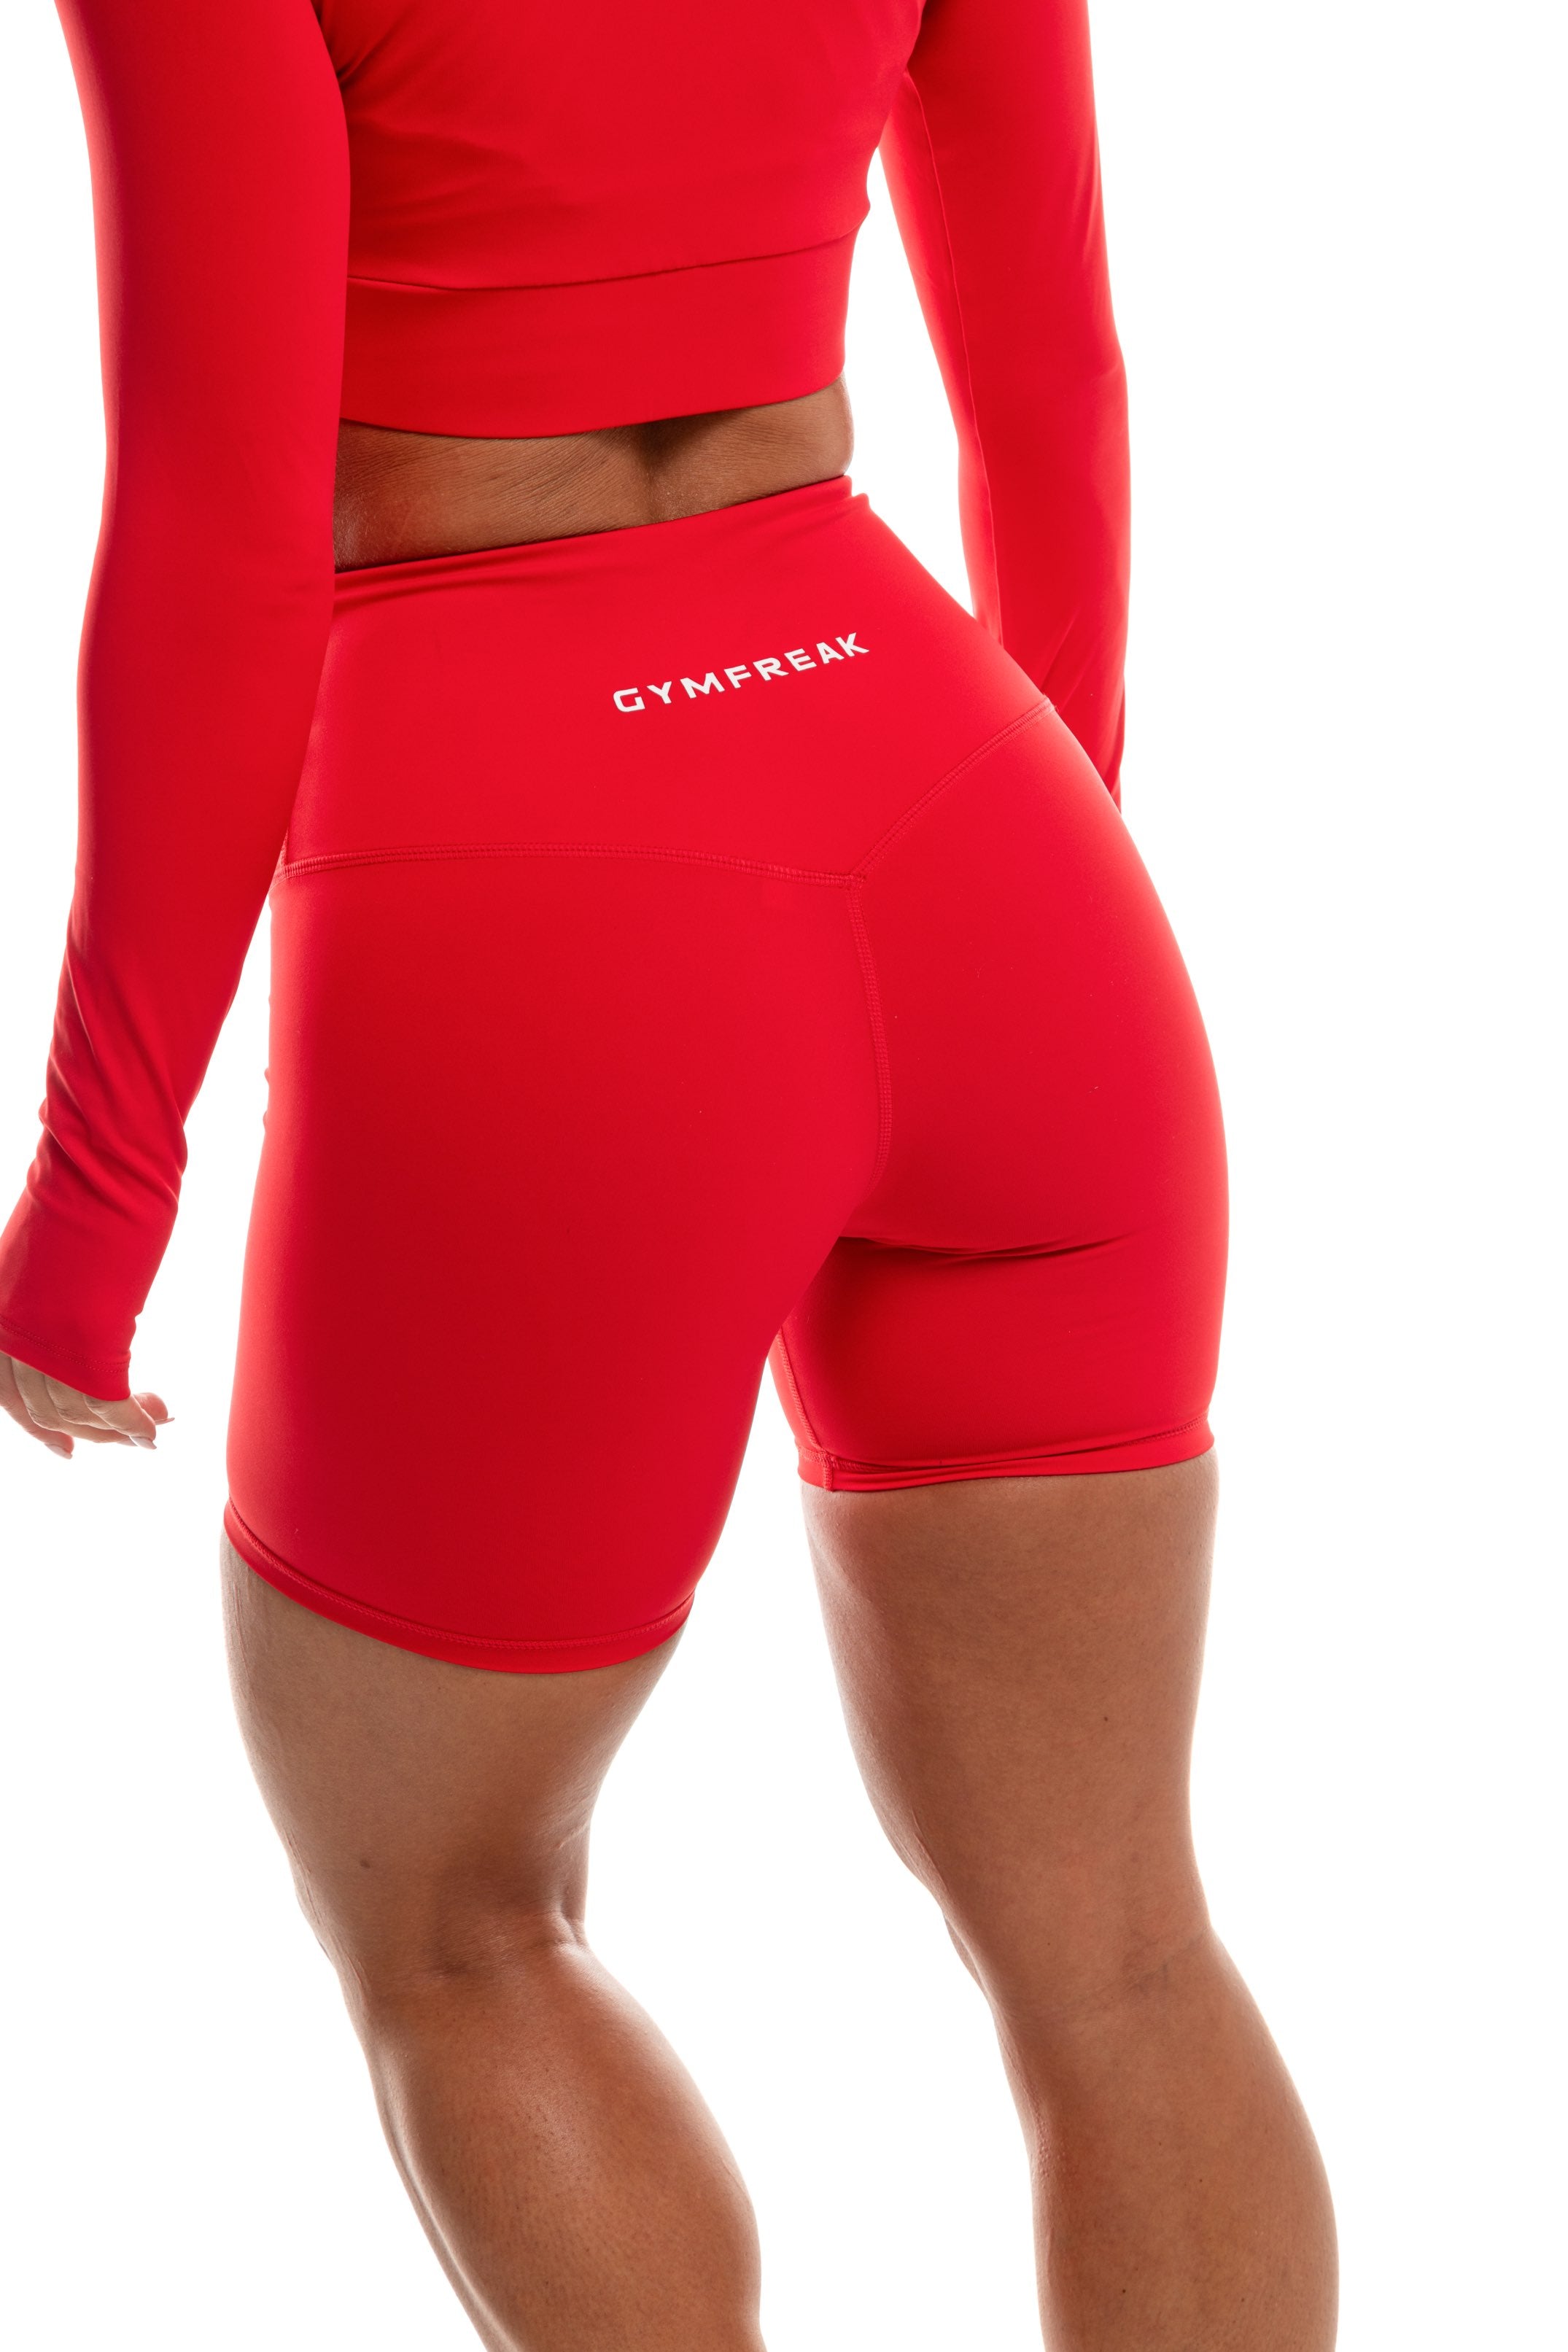 GymFreak Women's Vision Shorts - 6 inch Red